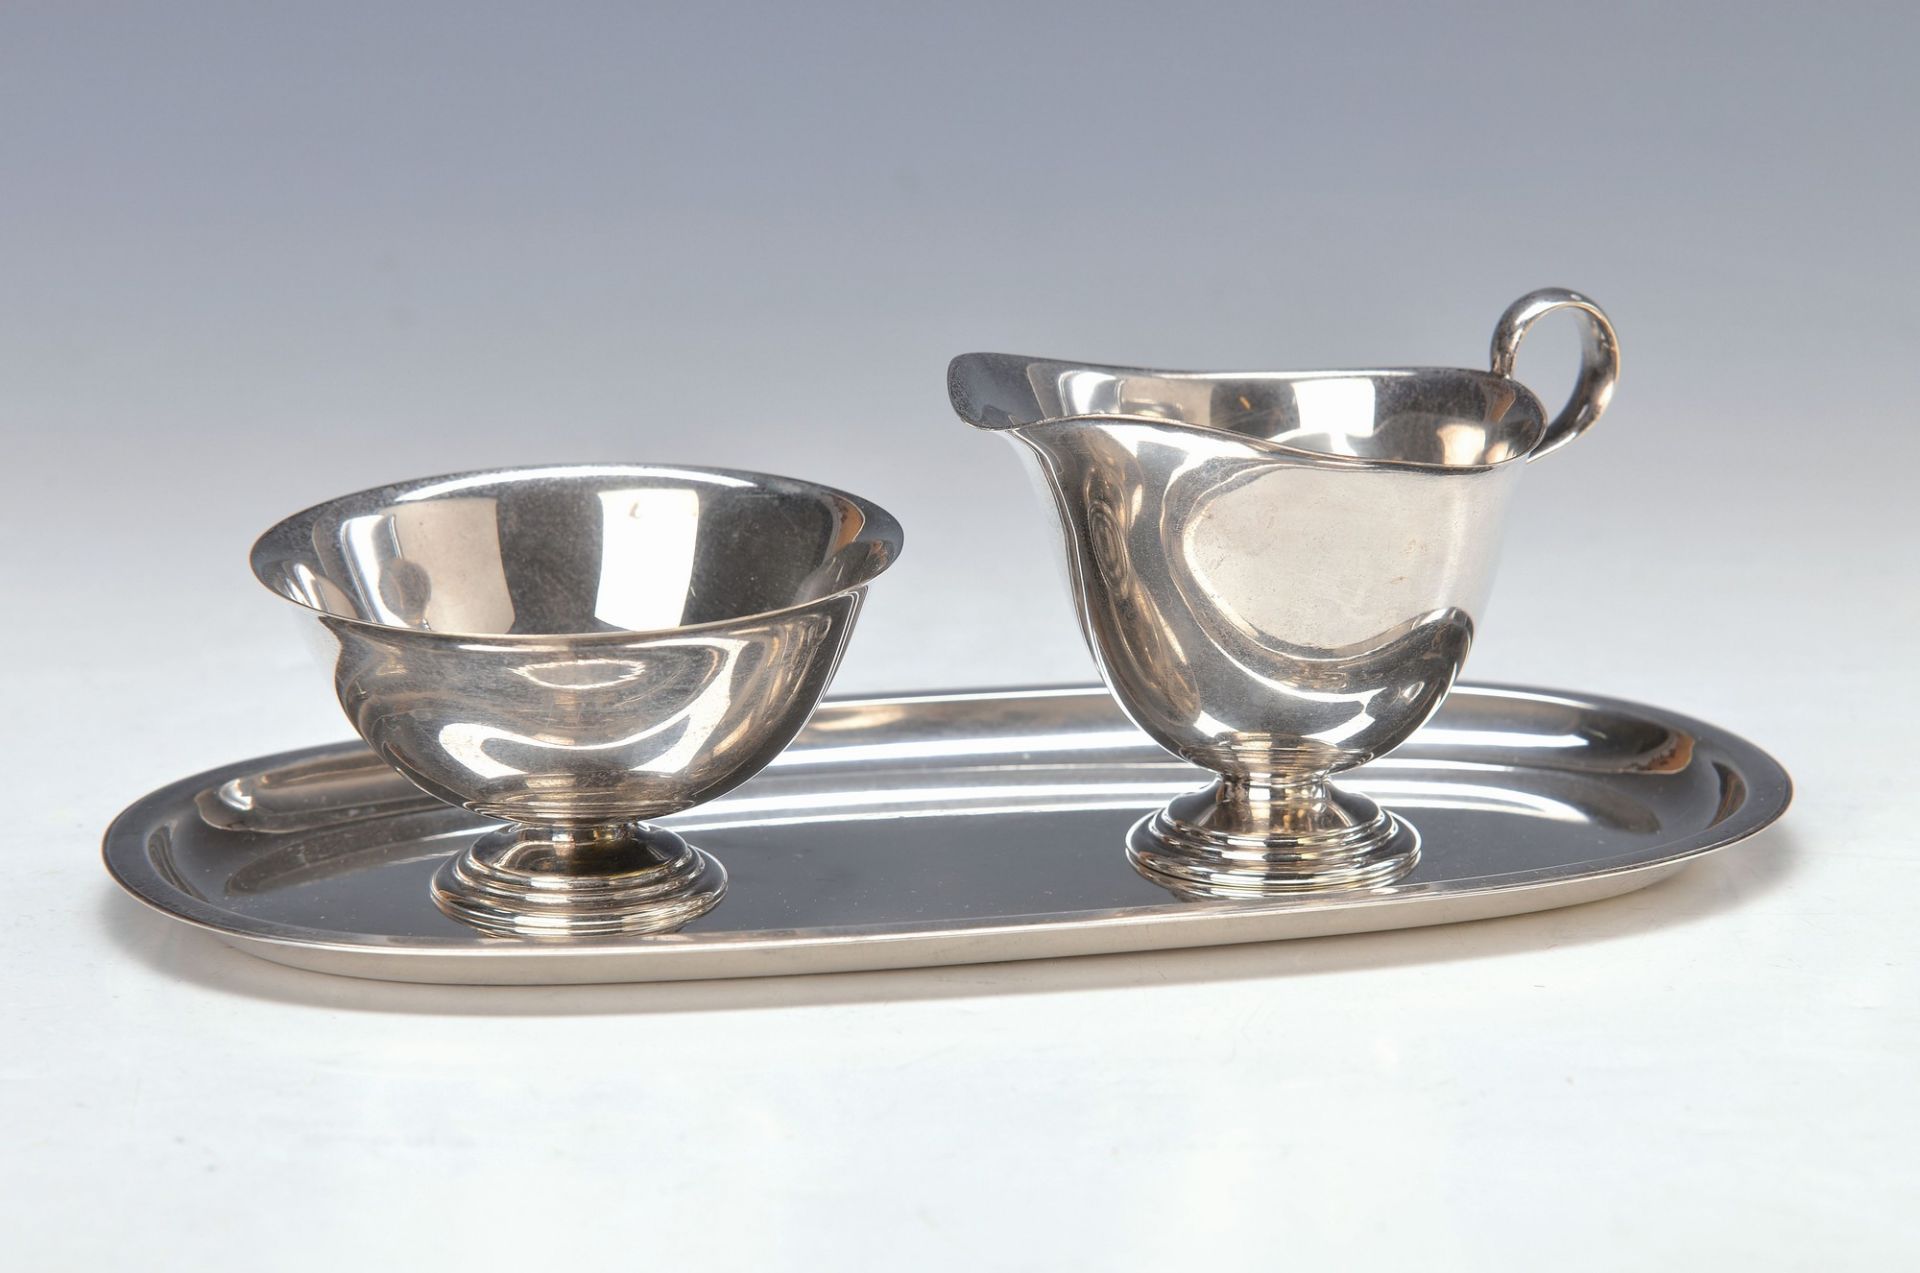 sugar- and creamer set, Wilkens, 1930s, 835 silver, oval tray, sugar bowl, creamer, stepped Art-